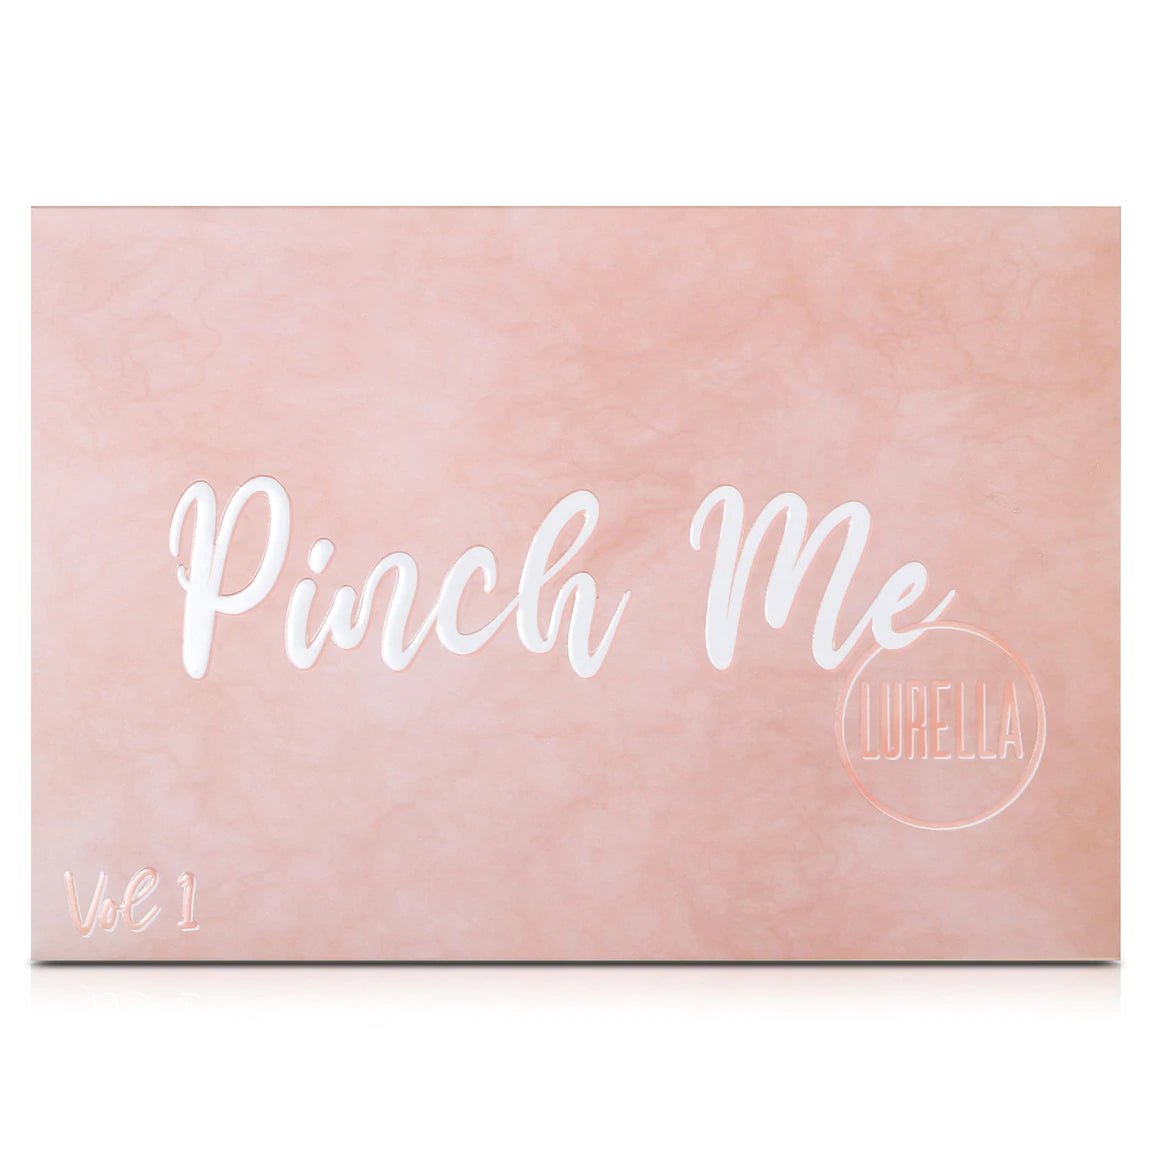 Pinch Me Vol.1 - DaizyKat Cosmetics Pinch Me Vol.1 Lurella Cosmetics Face Palette